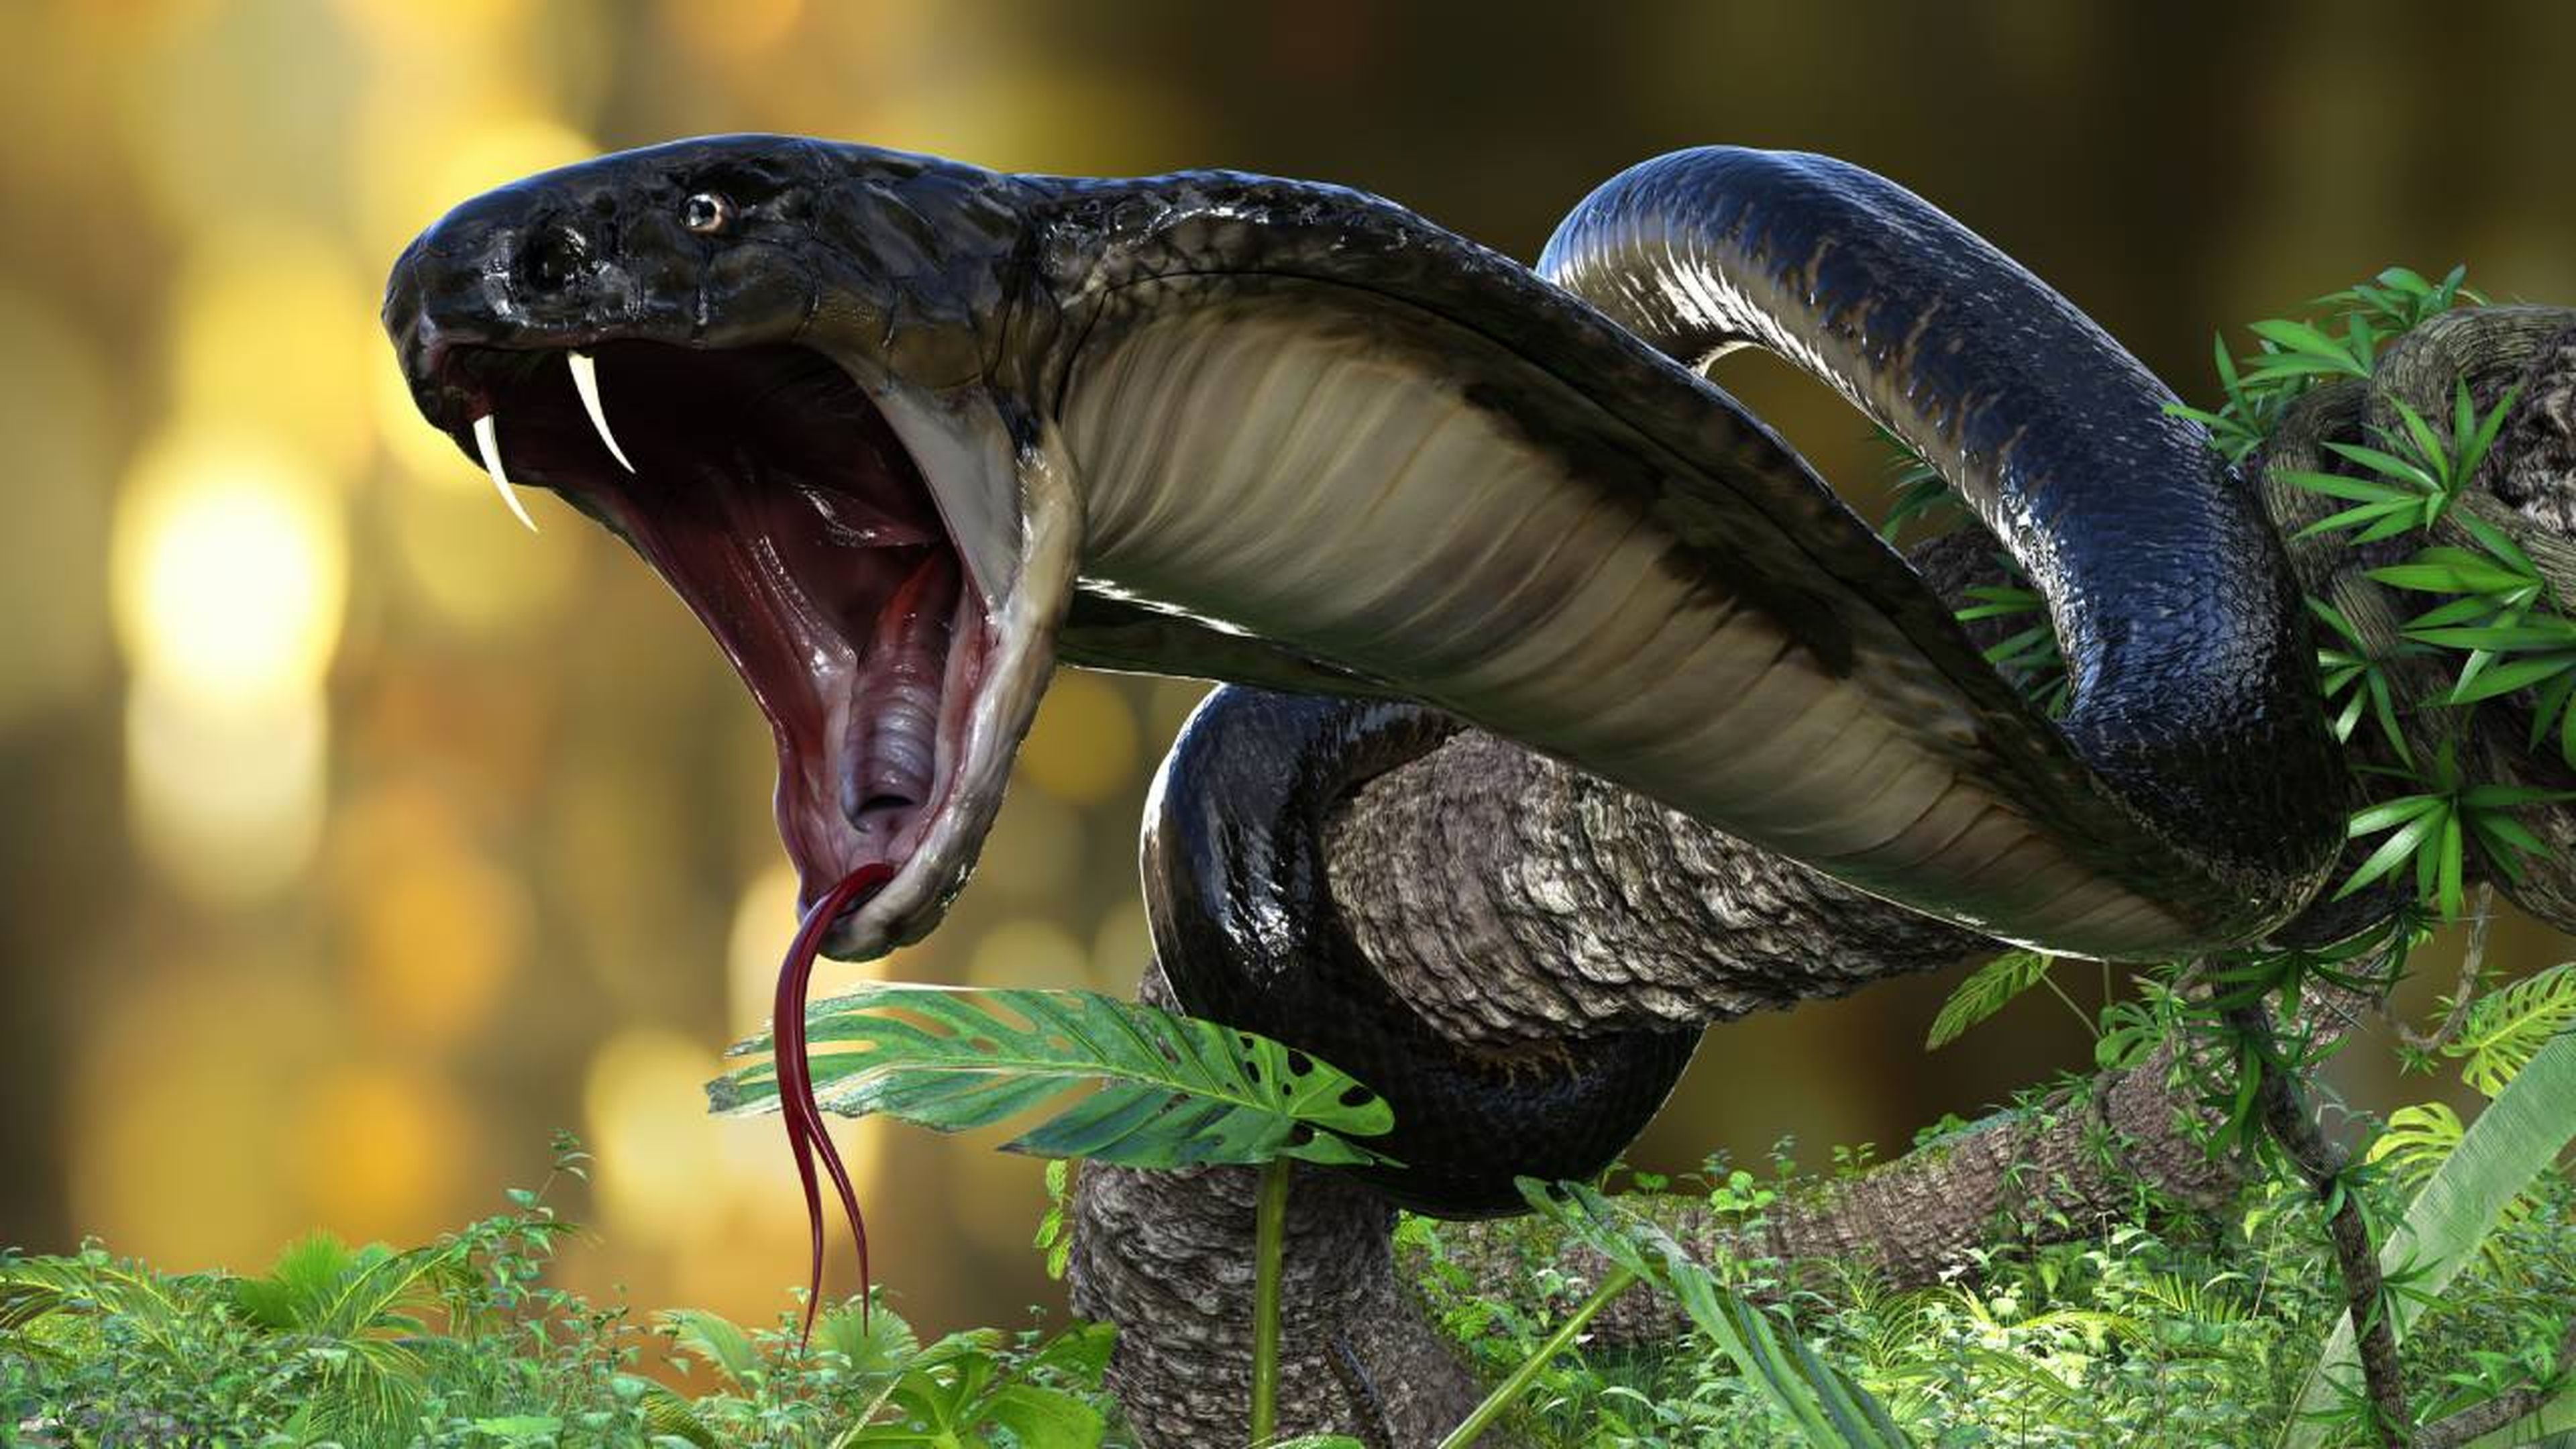 Cobra serpiente